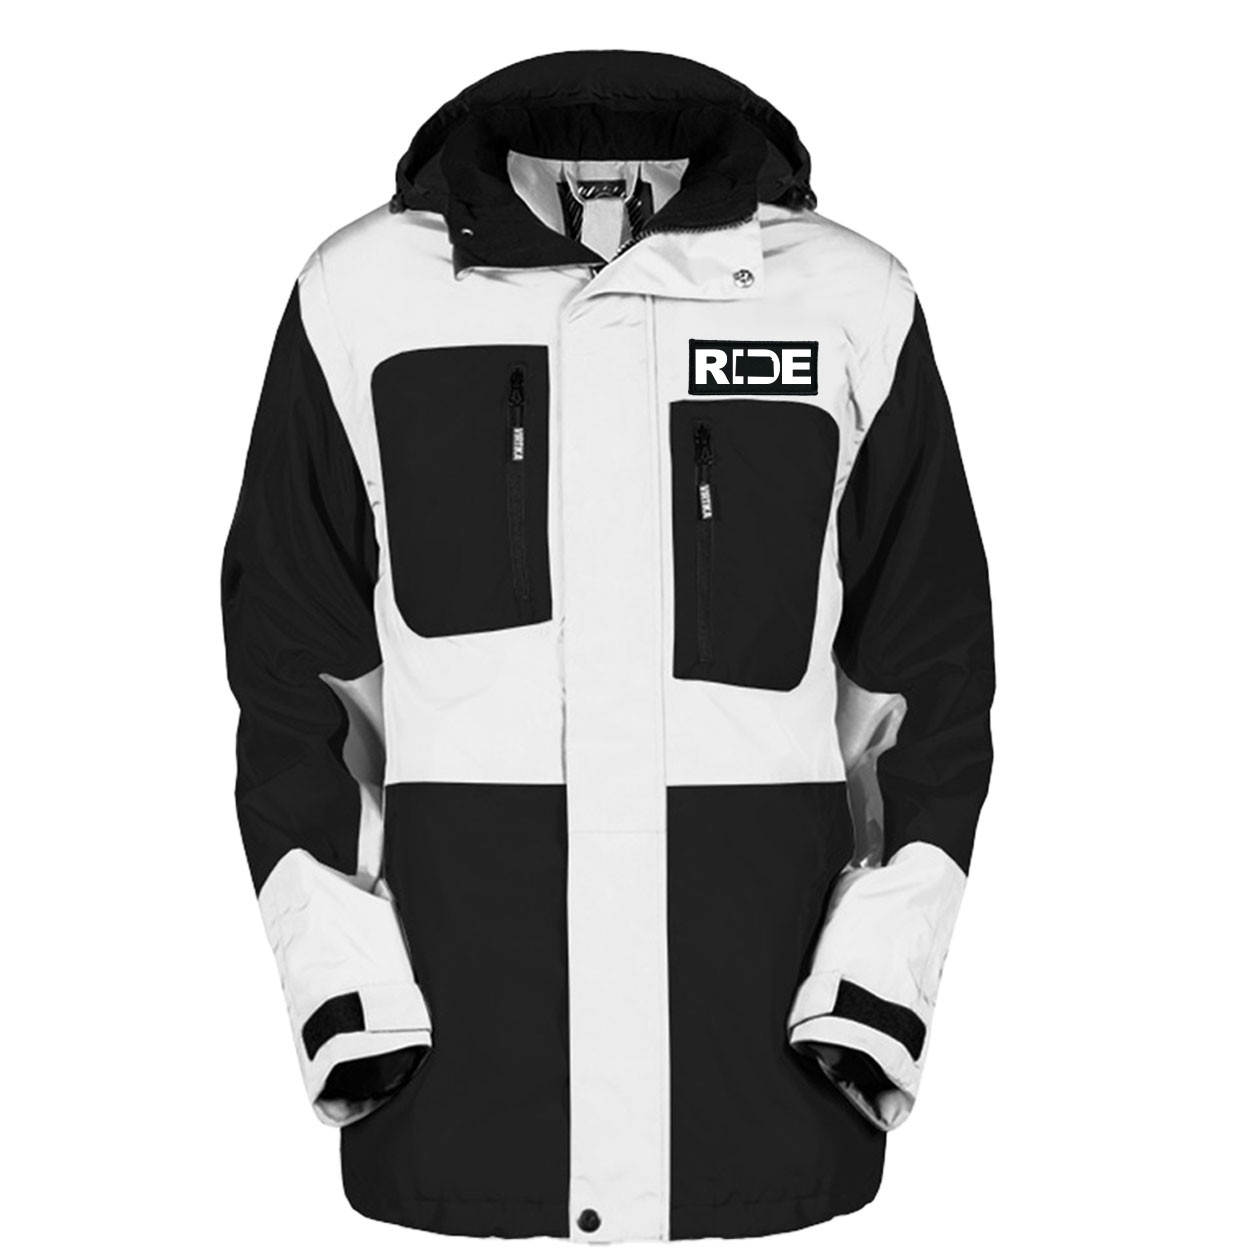 Ride Kansas Classic Woven Patch Pro Snowboard Jacket (Black/White)